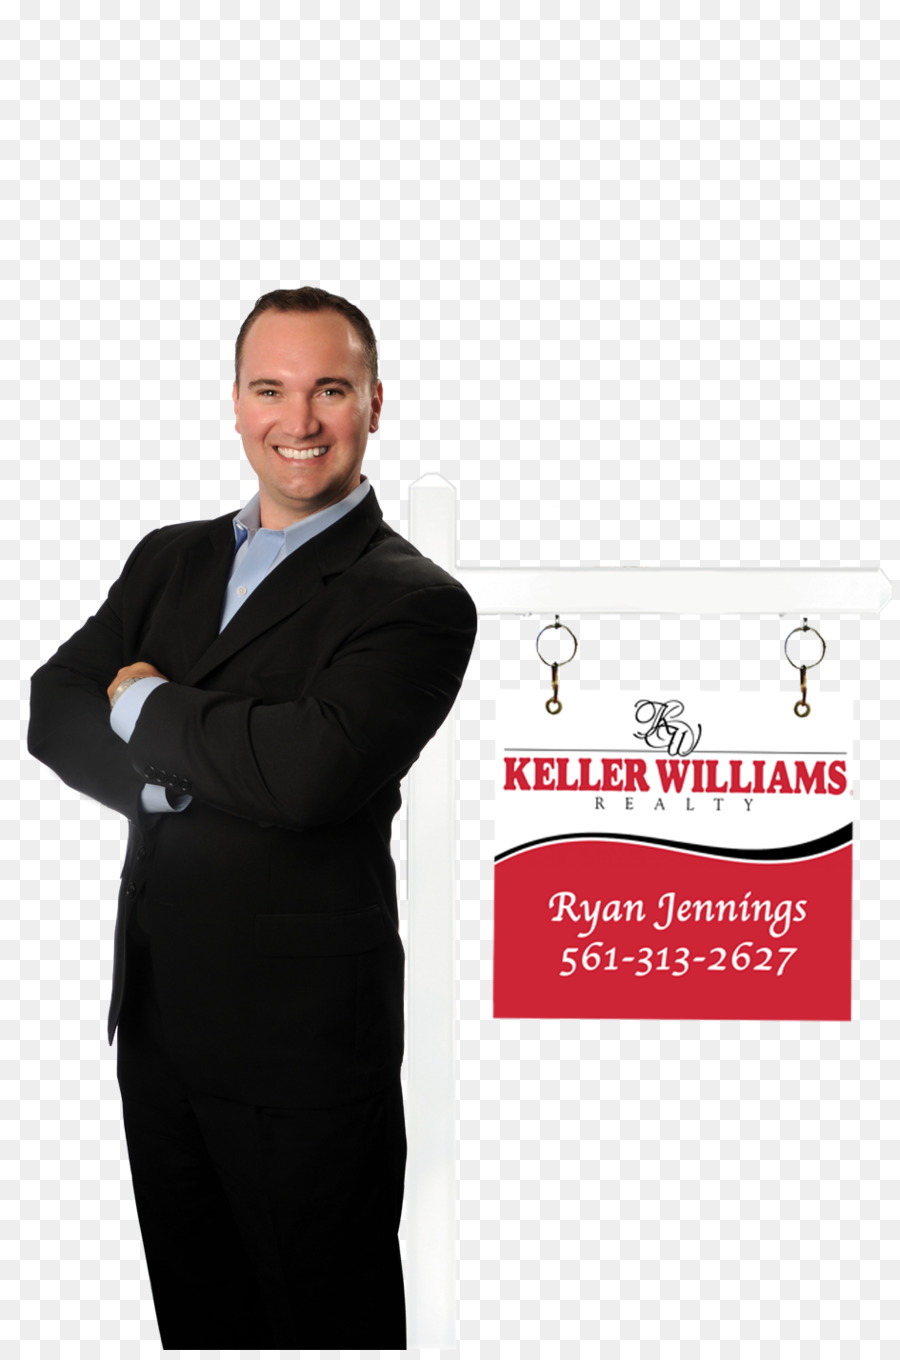 Keller Williams Realty Unternehmer Smoking Public Relations - Business